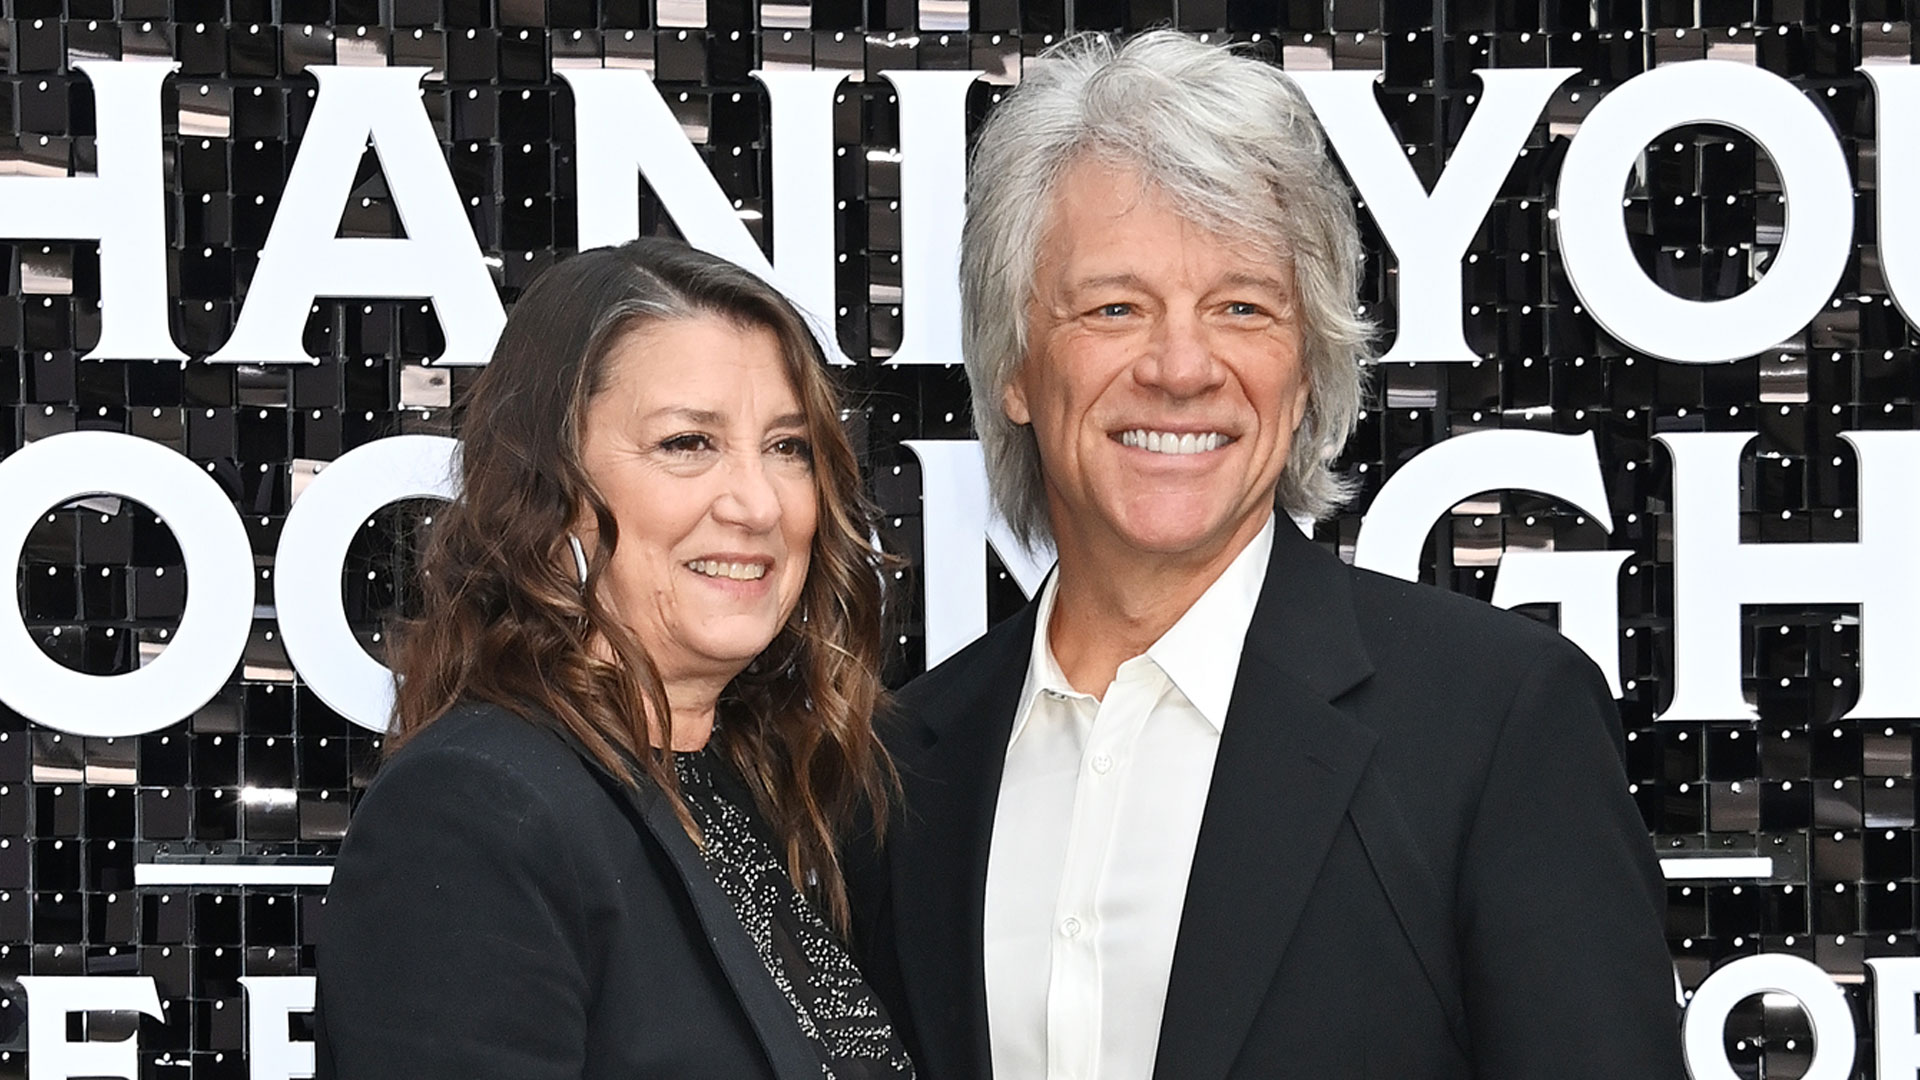 Meet Jon Bon Jovi’s Wife, Dorothea Hurley – The Woman Behind the Rock Legend!